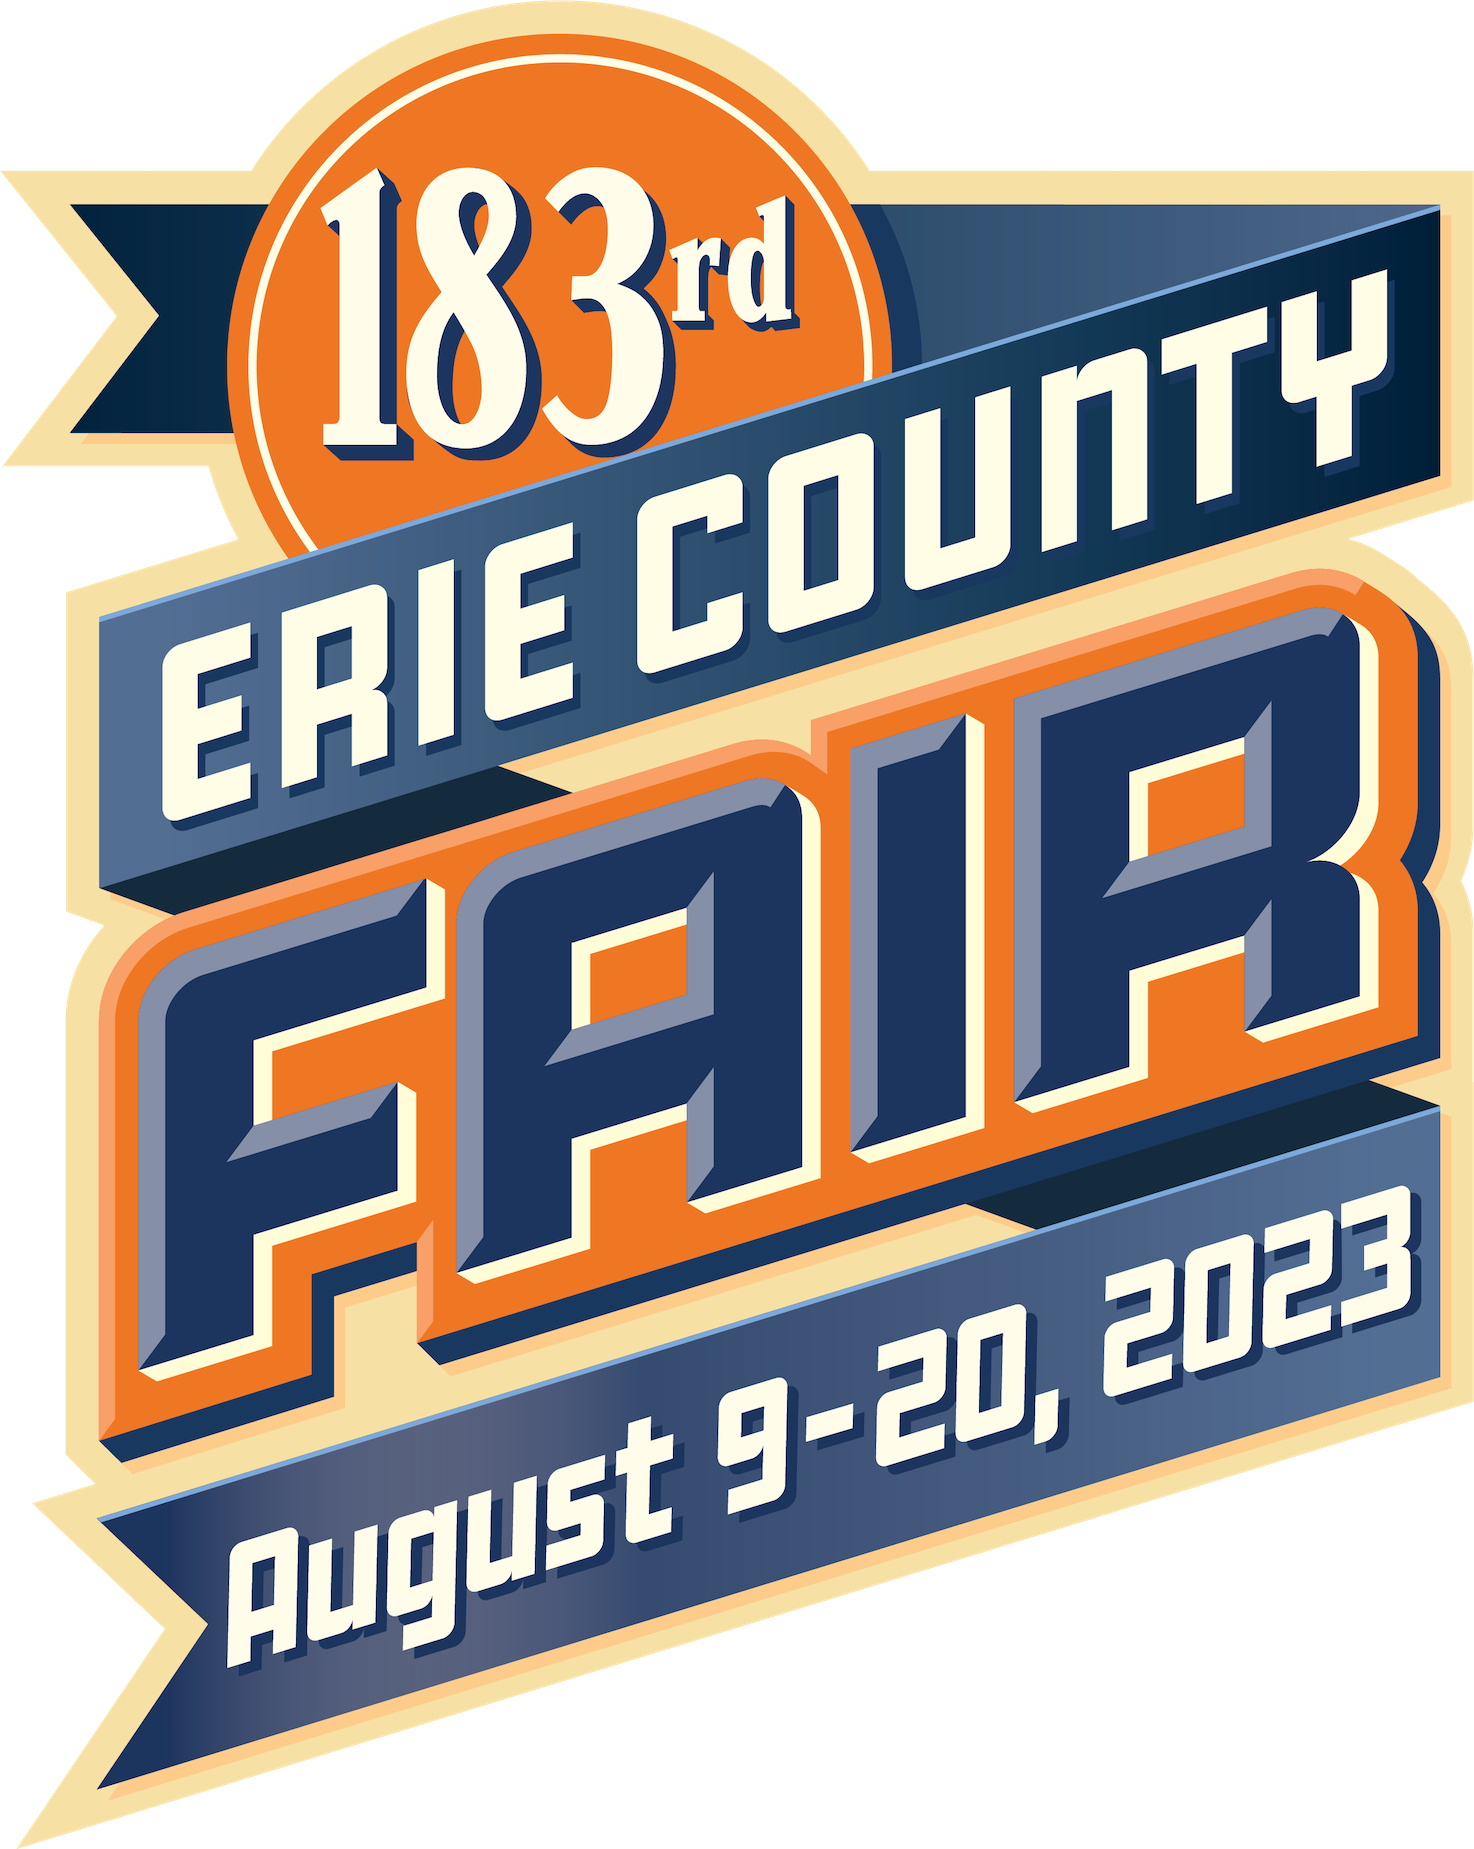 Erie County Fair logo courtesy of the venue